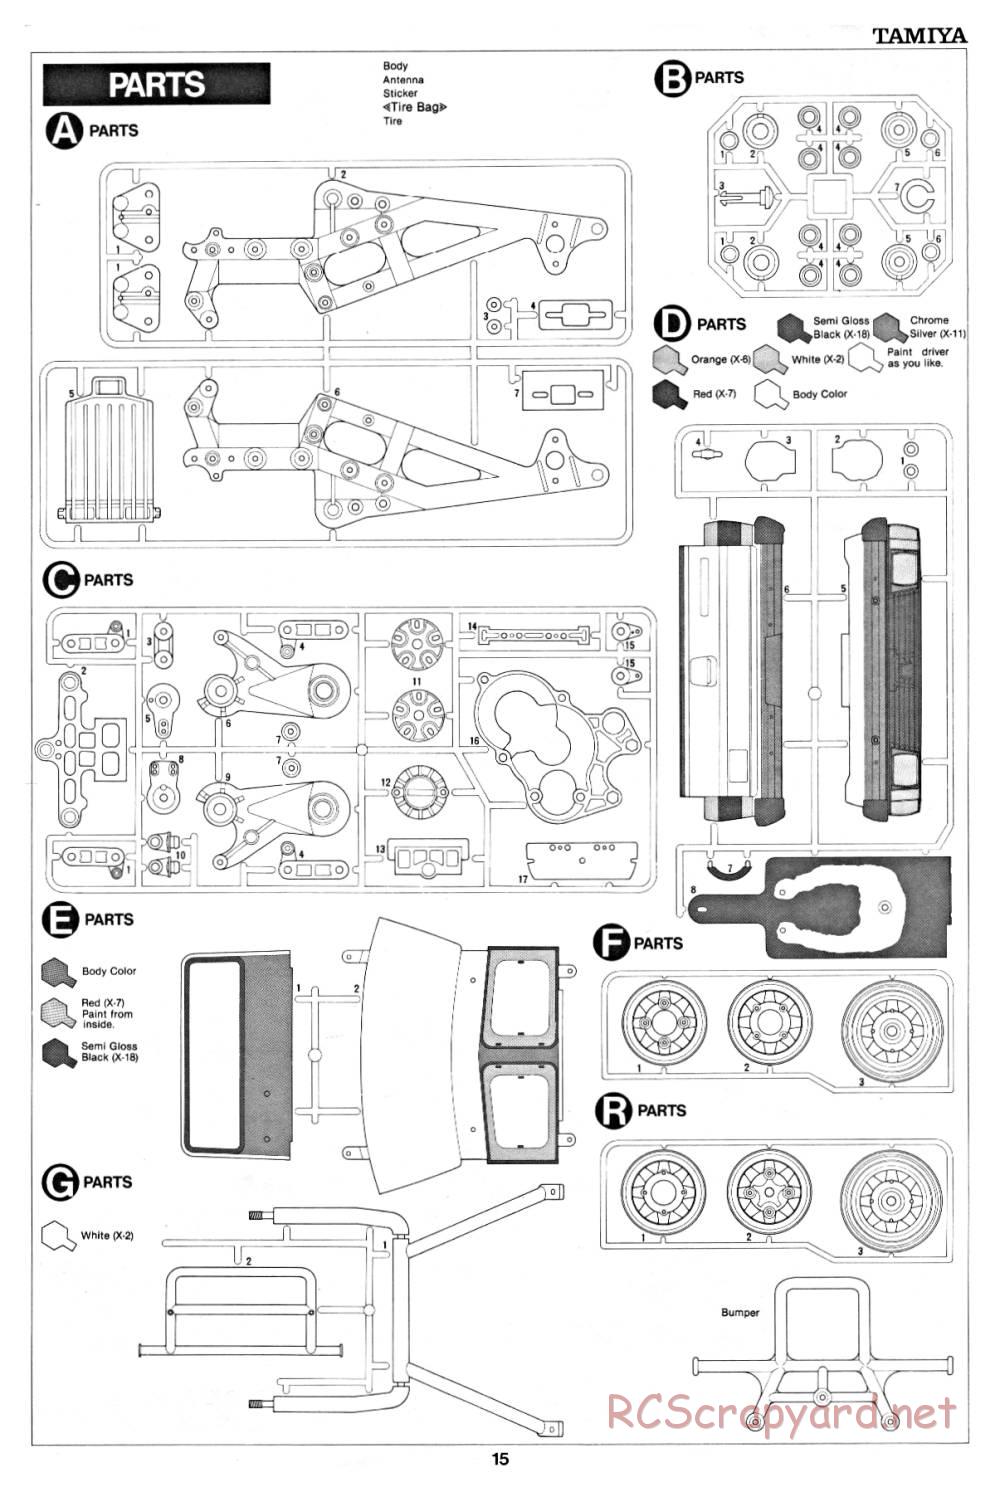 Tamiya - Subaru Brat - 58038 - Manual - Page 15